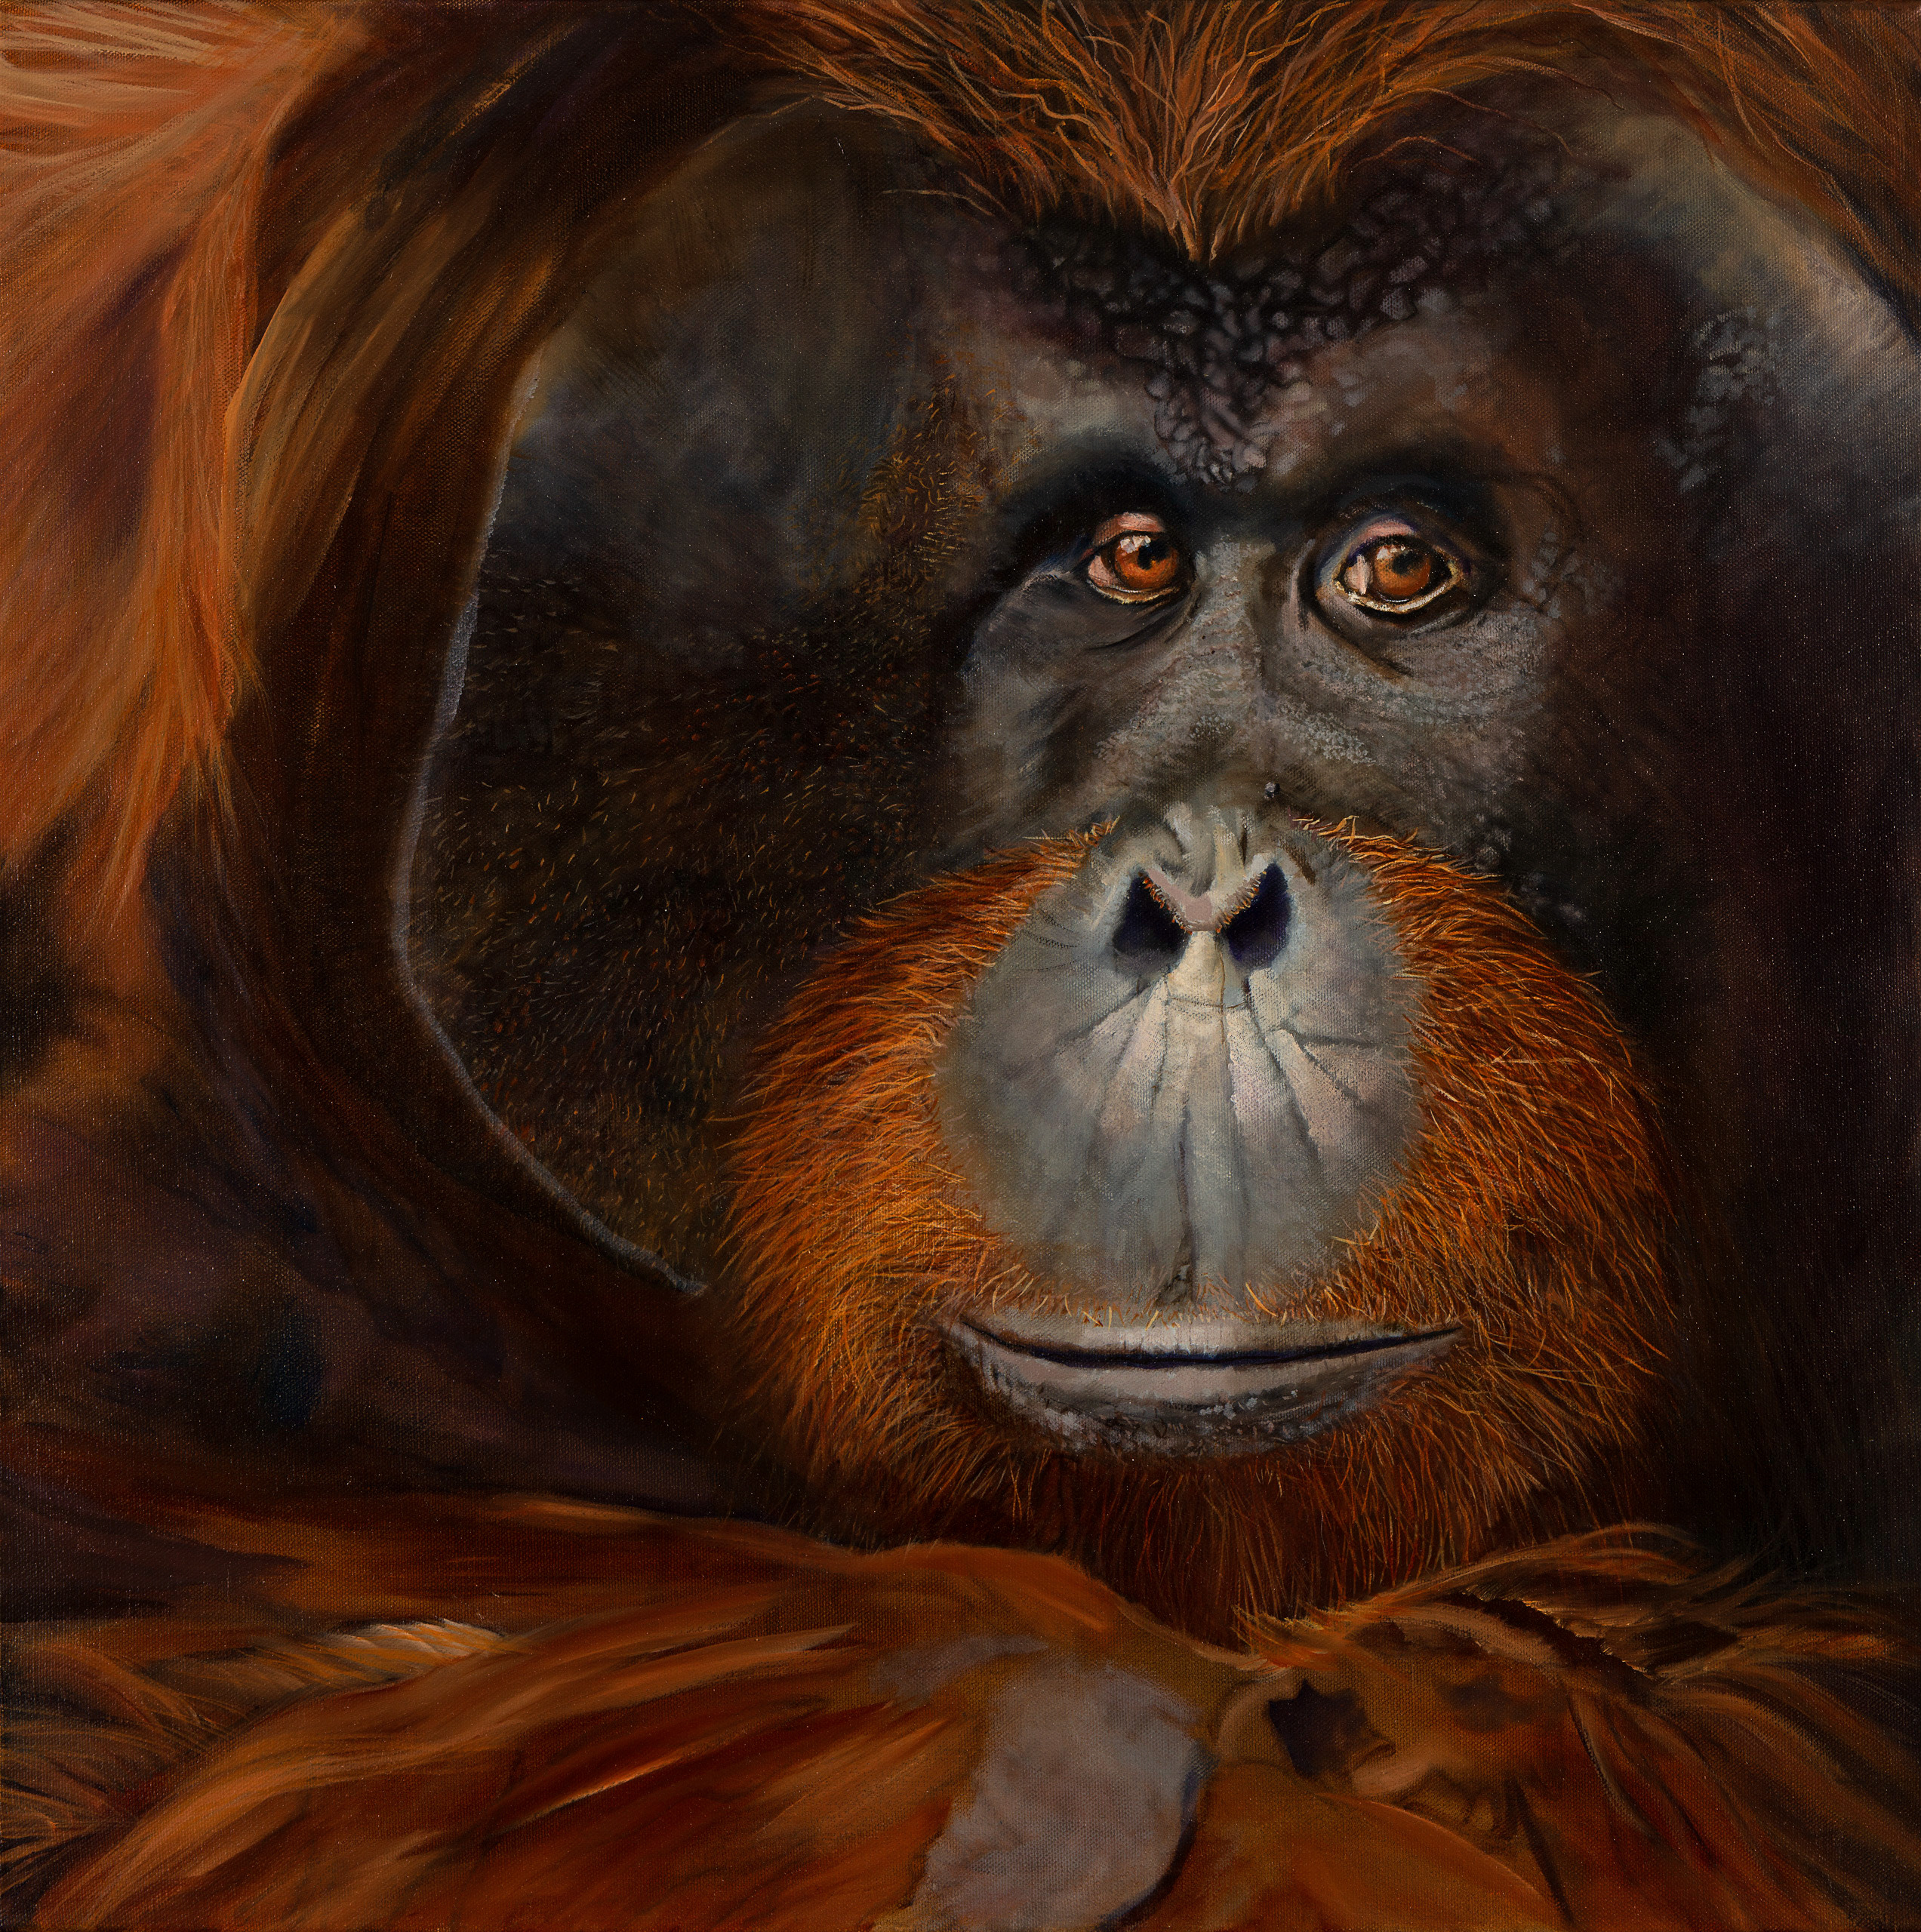 Alexandra saunders   orangutan. bruno tt6rcv rkp9wa